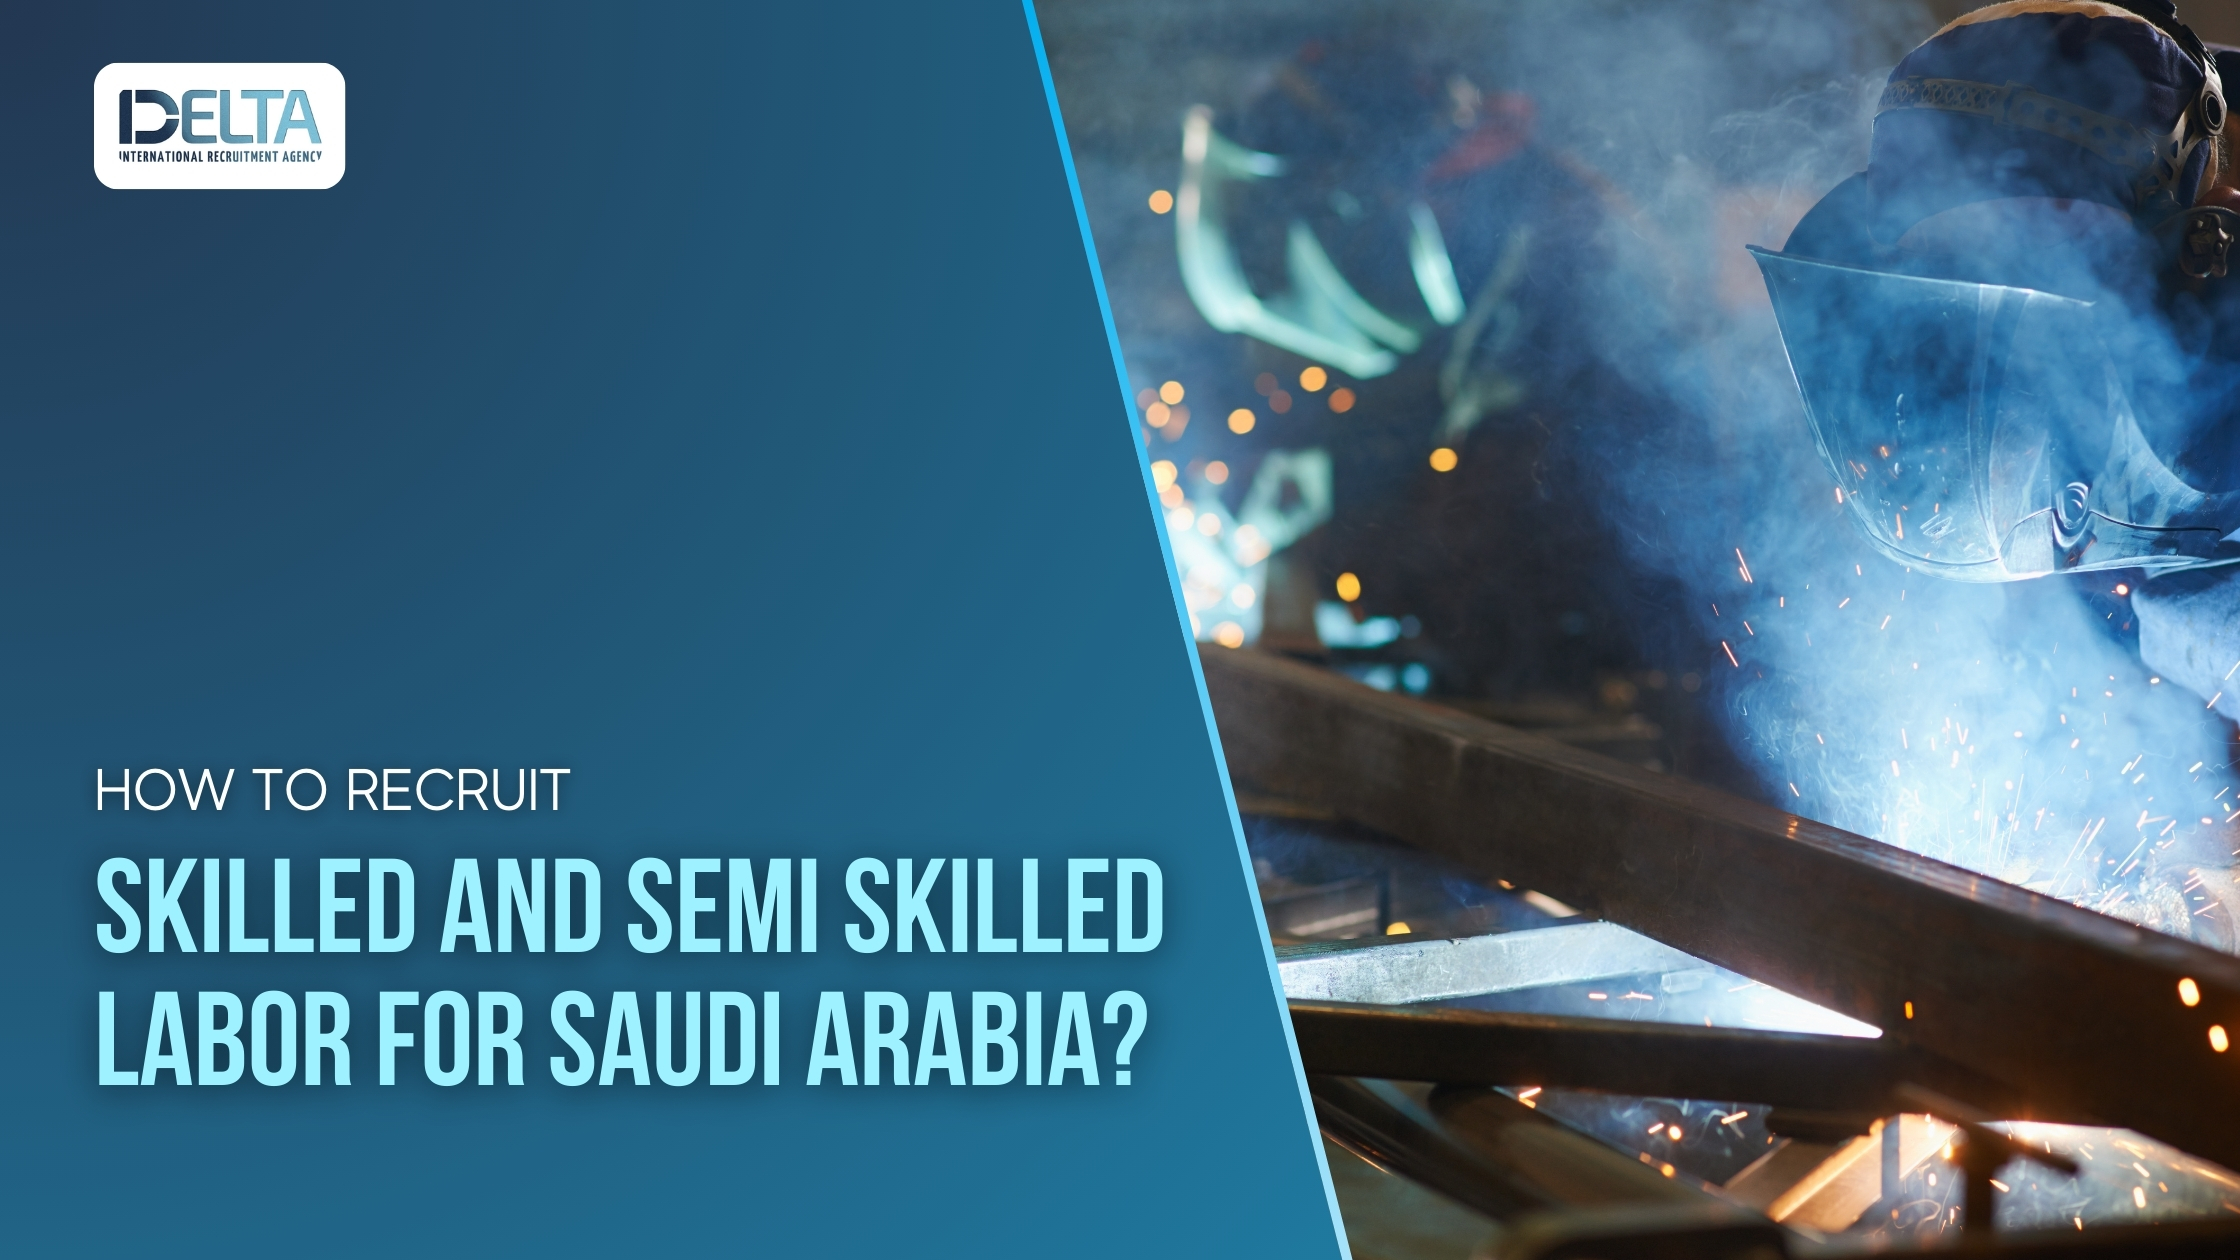 How to Recruit Skilled and Semi Skilled Labor for Saudi Arabia?